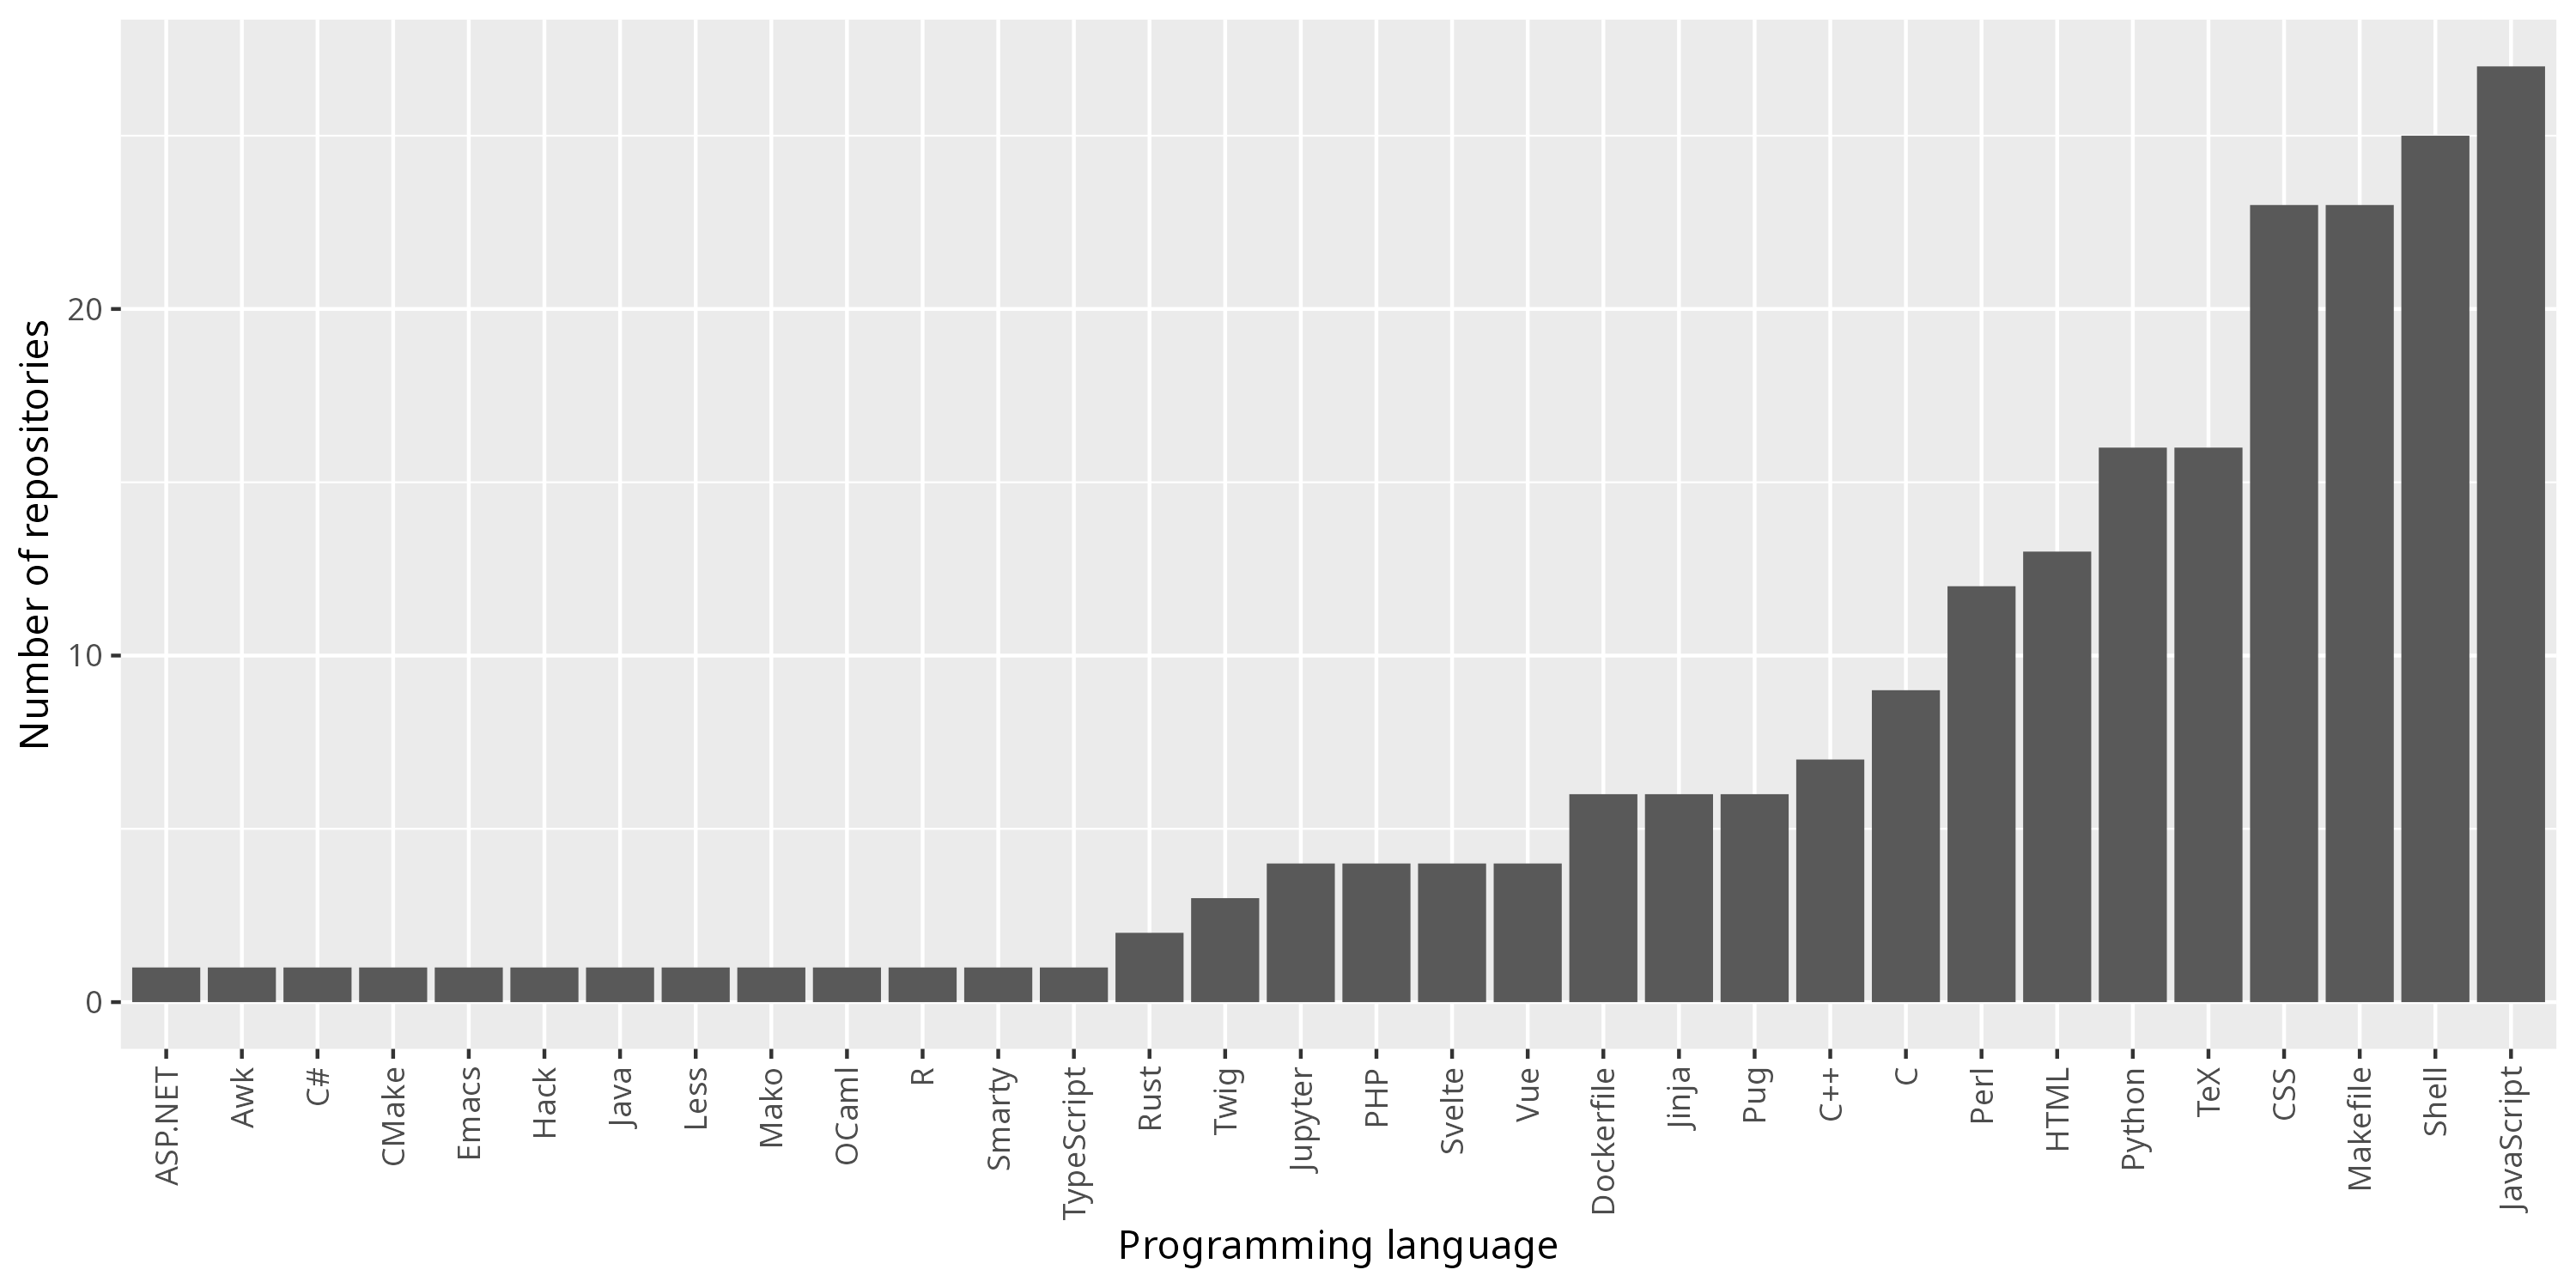 bar plots of languages I used, according to github-linguist